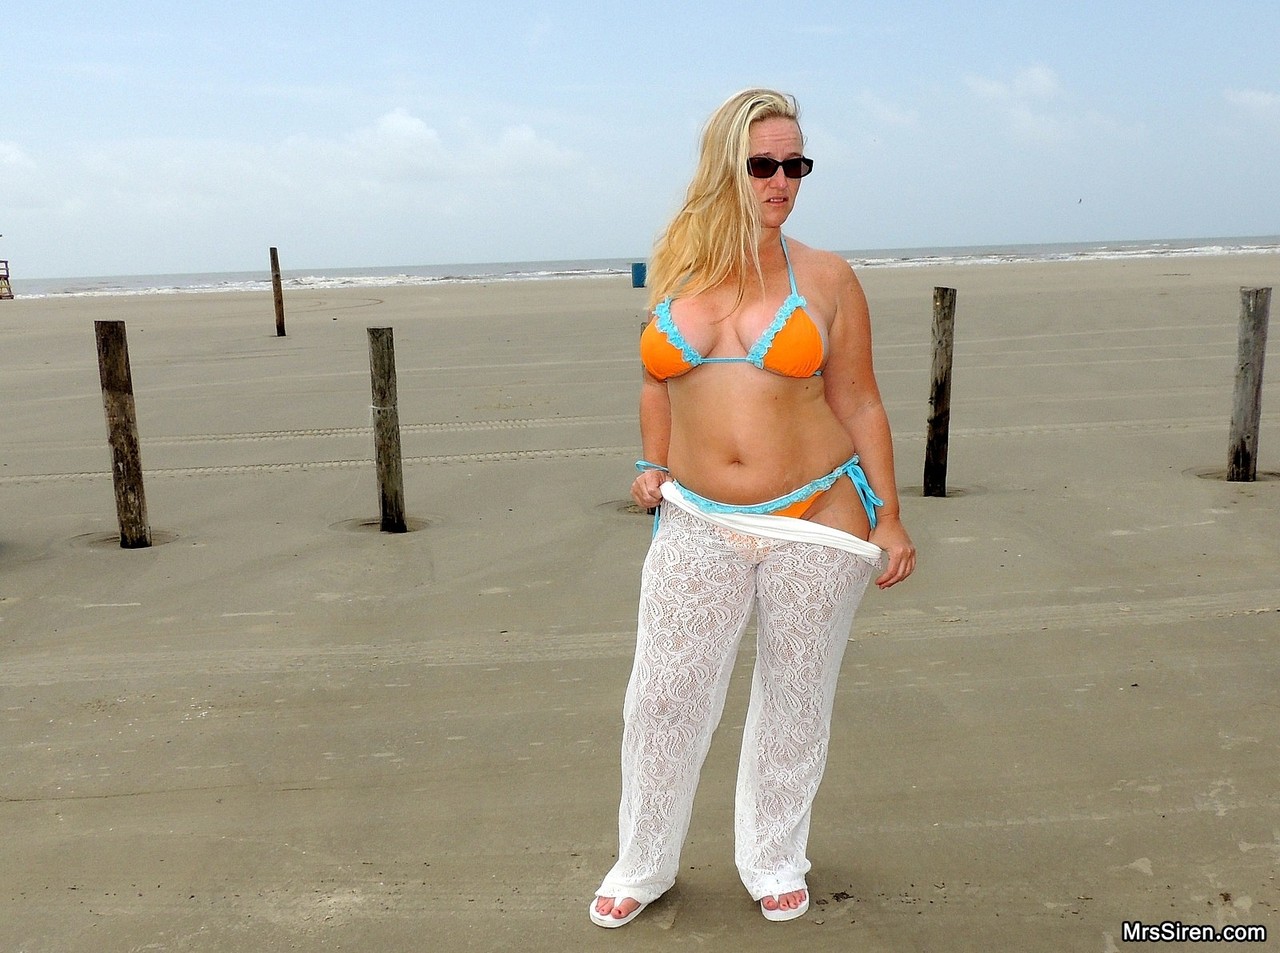 Short MILF Dee Siren strips on the beach & exposes her monster curves 포르노 사진 #425972300 | Mrs Siren Pics, Dee Siren, Chubby, 모바일 포르노